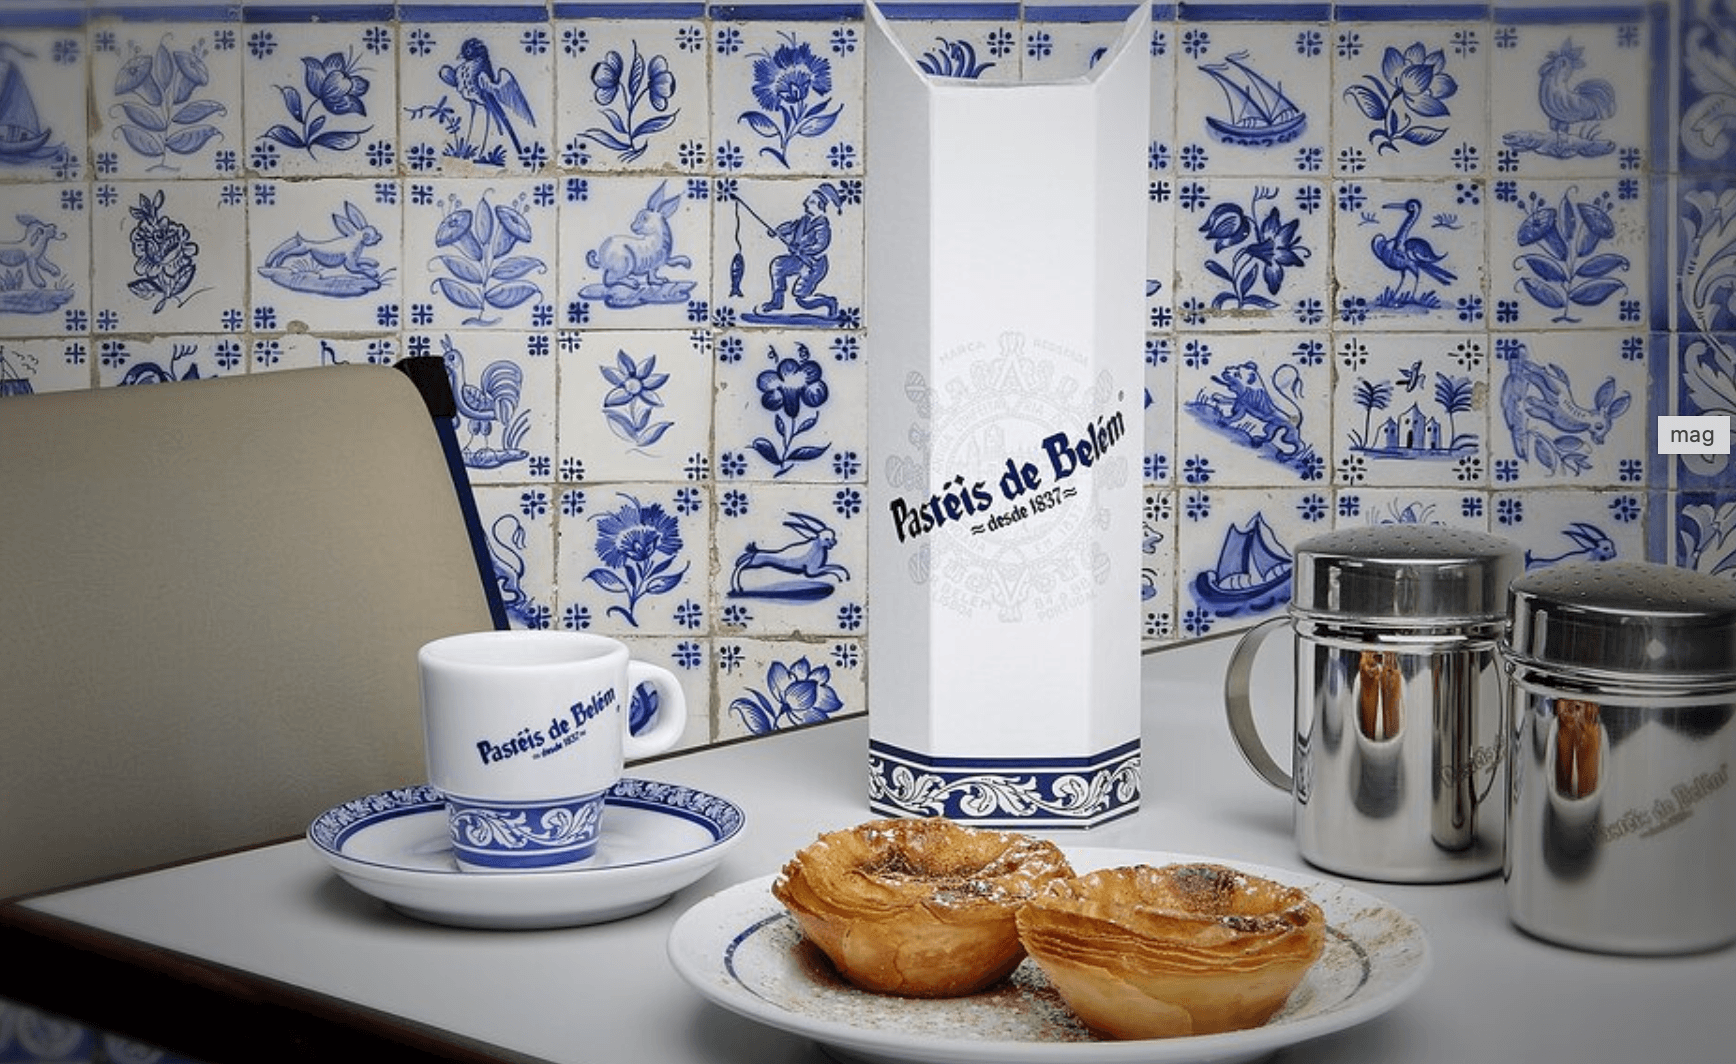 Cafe Pasteis de Belem